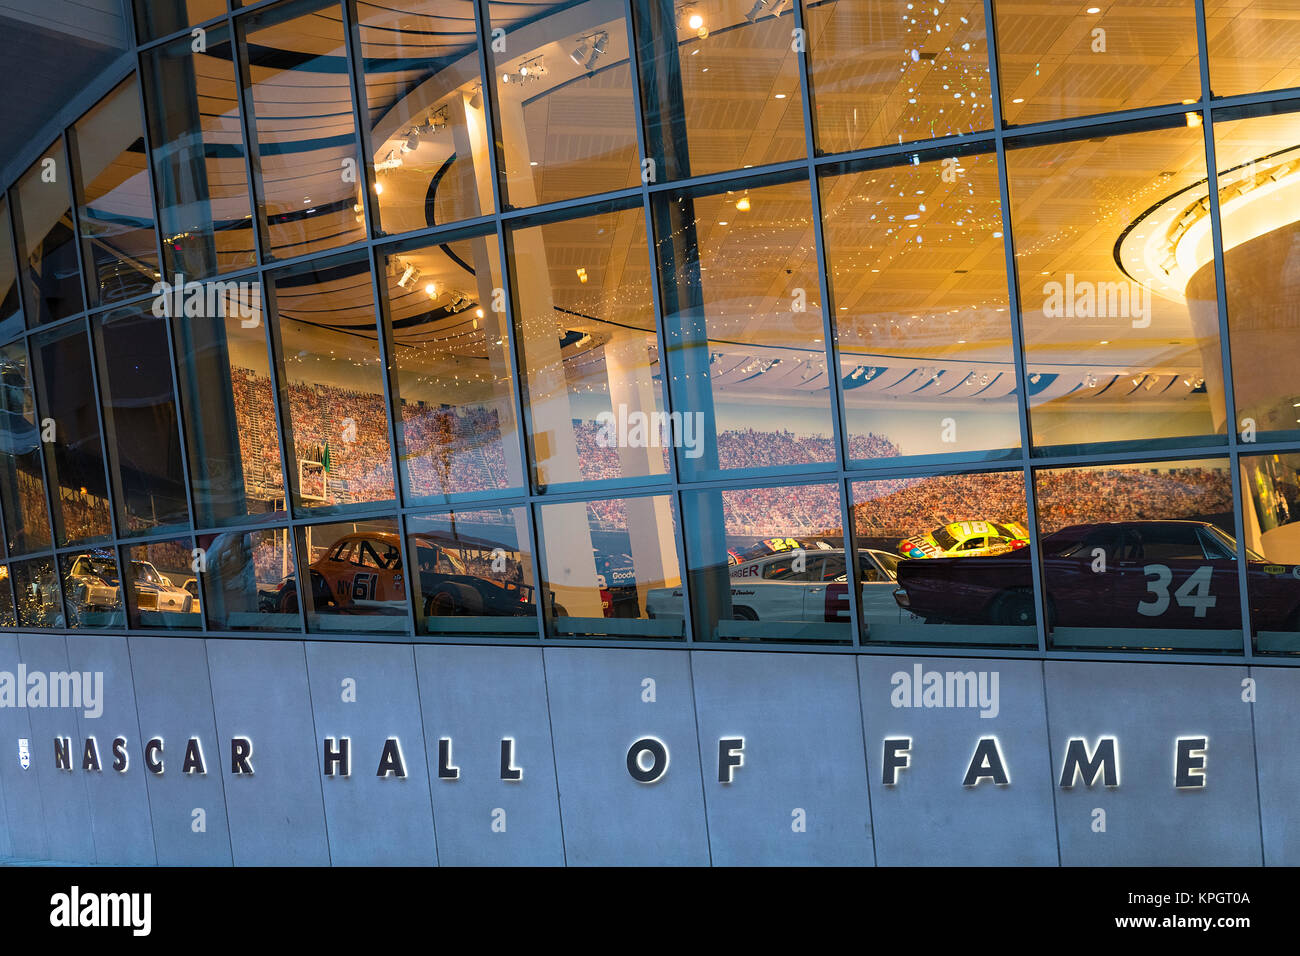 Nascar Hall of Fame, Charlotte, North Carolina, USA. Stock Photo